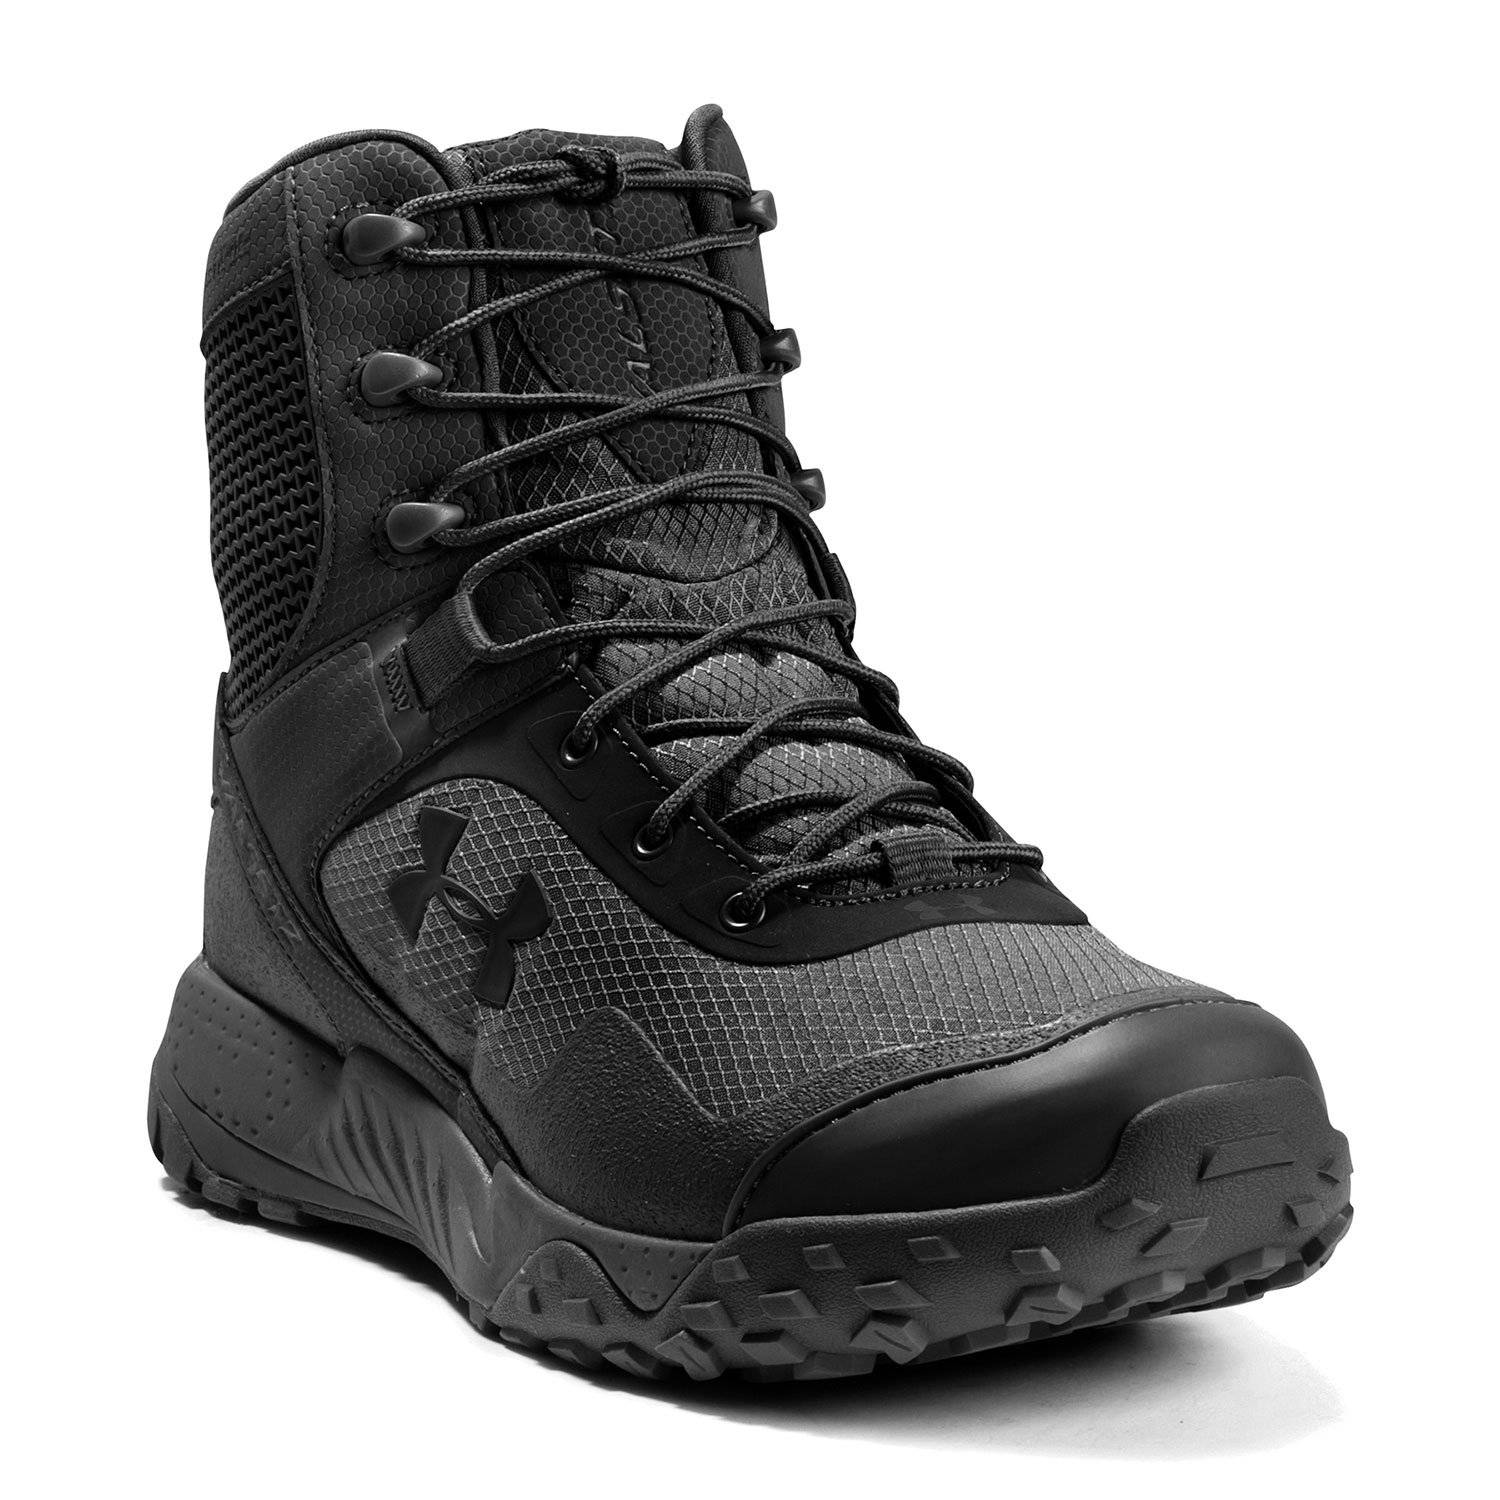 Under Armour Mens UA Valsetz 2.0 Wide Tactical Boots Black 1296759-001 